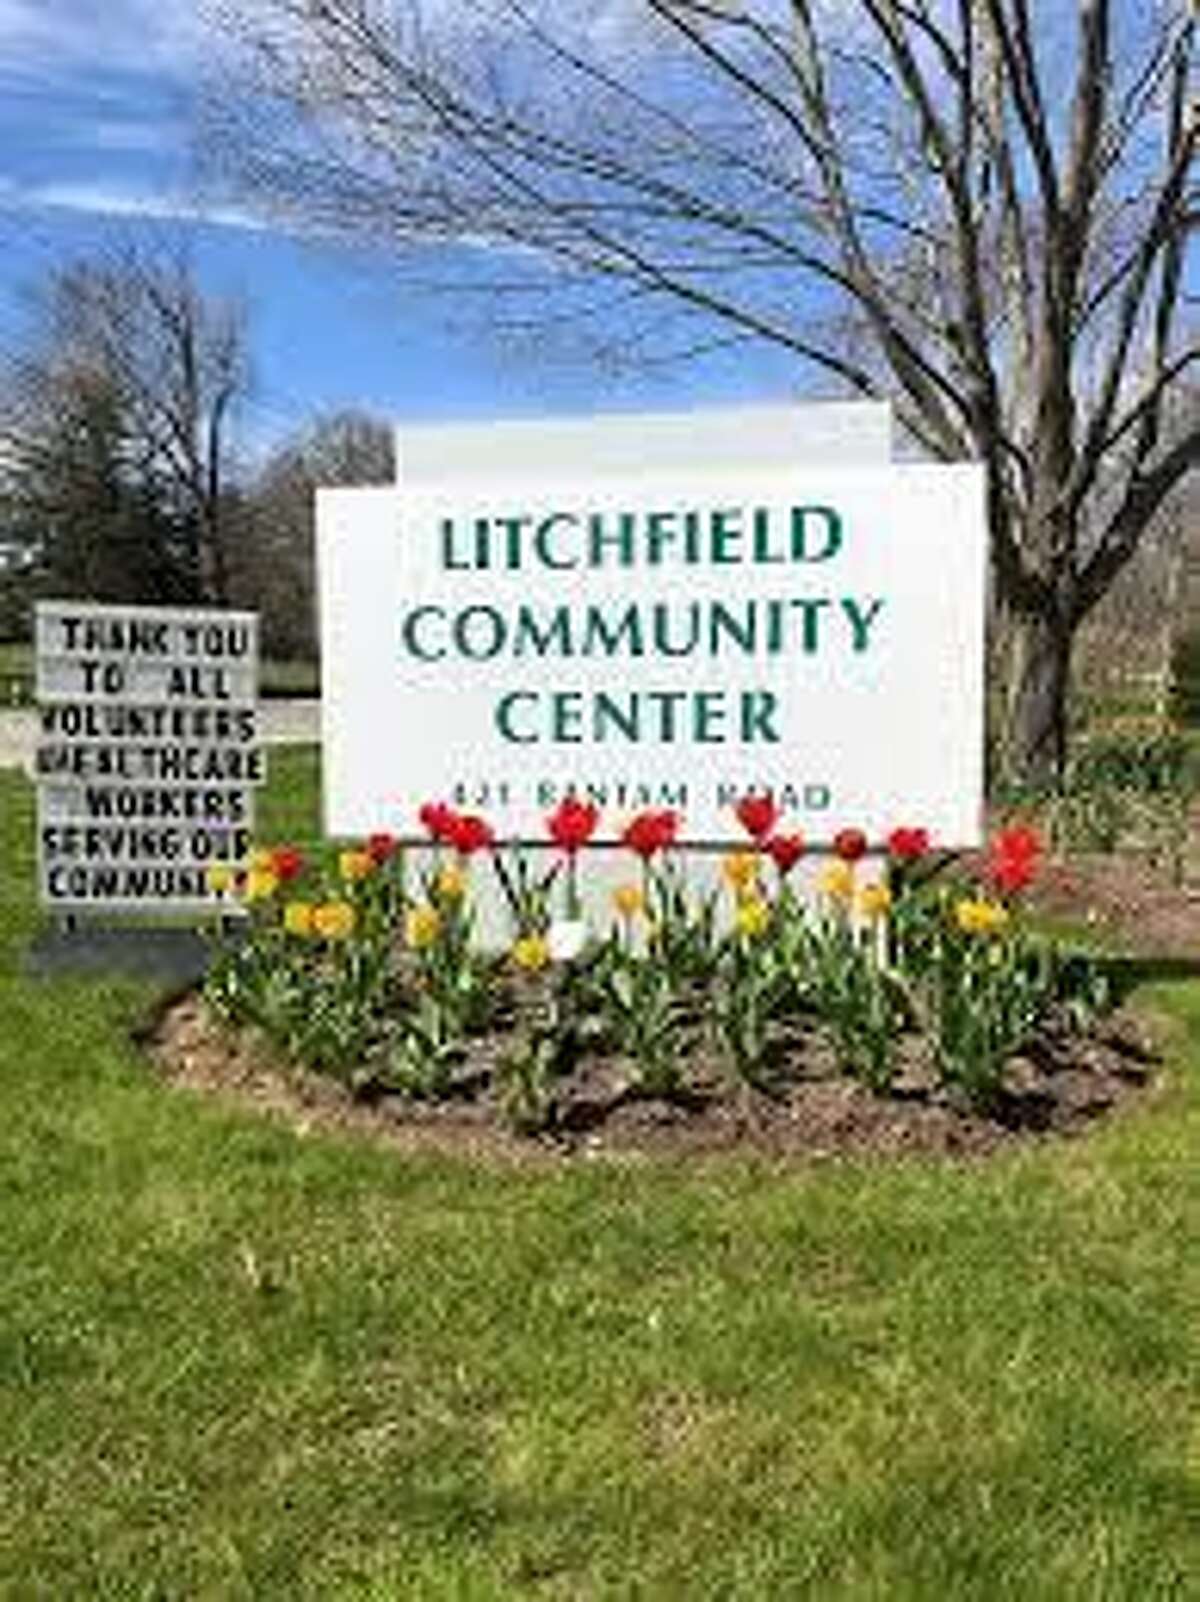 Litchfield Community Center on Bantam Road.